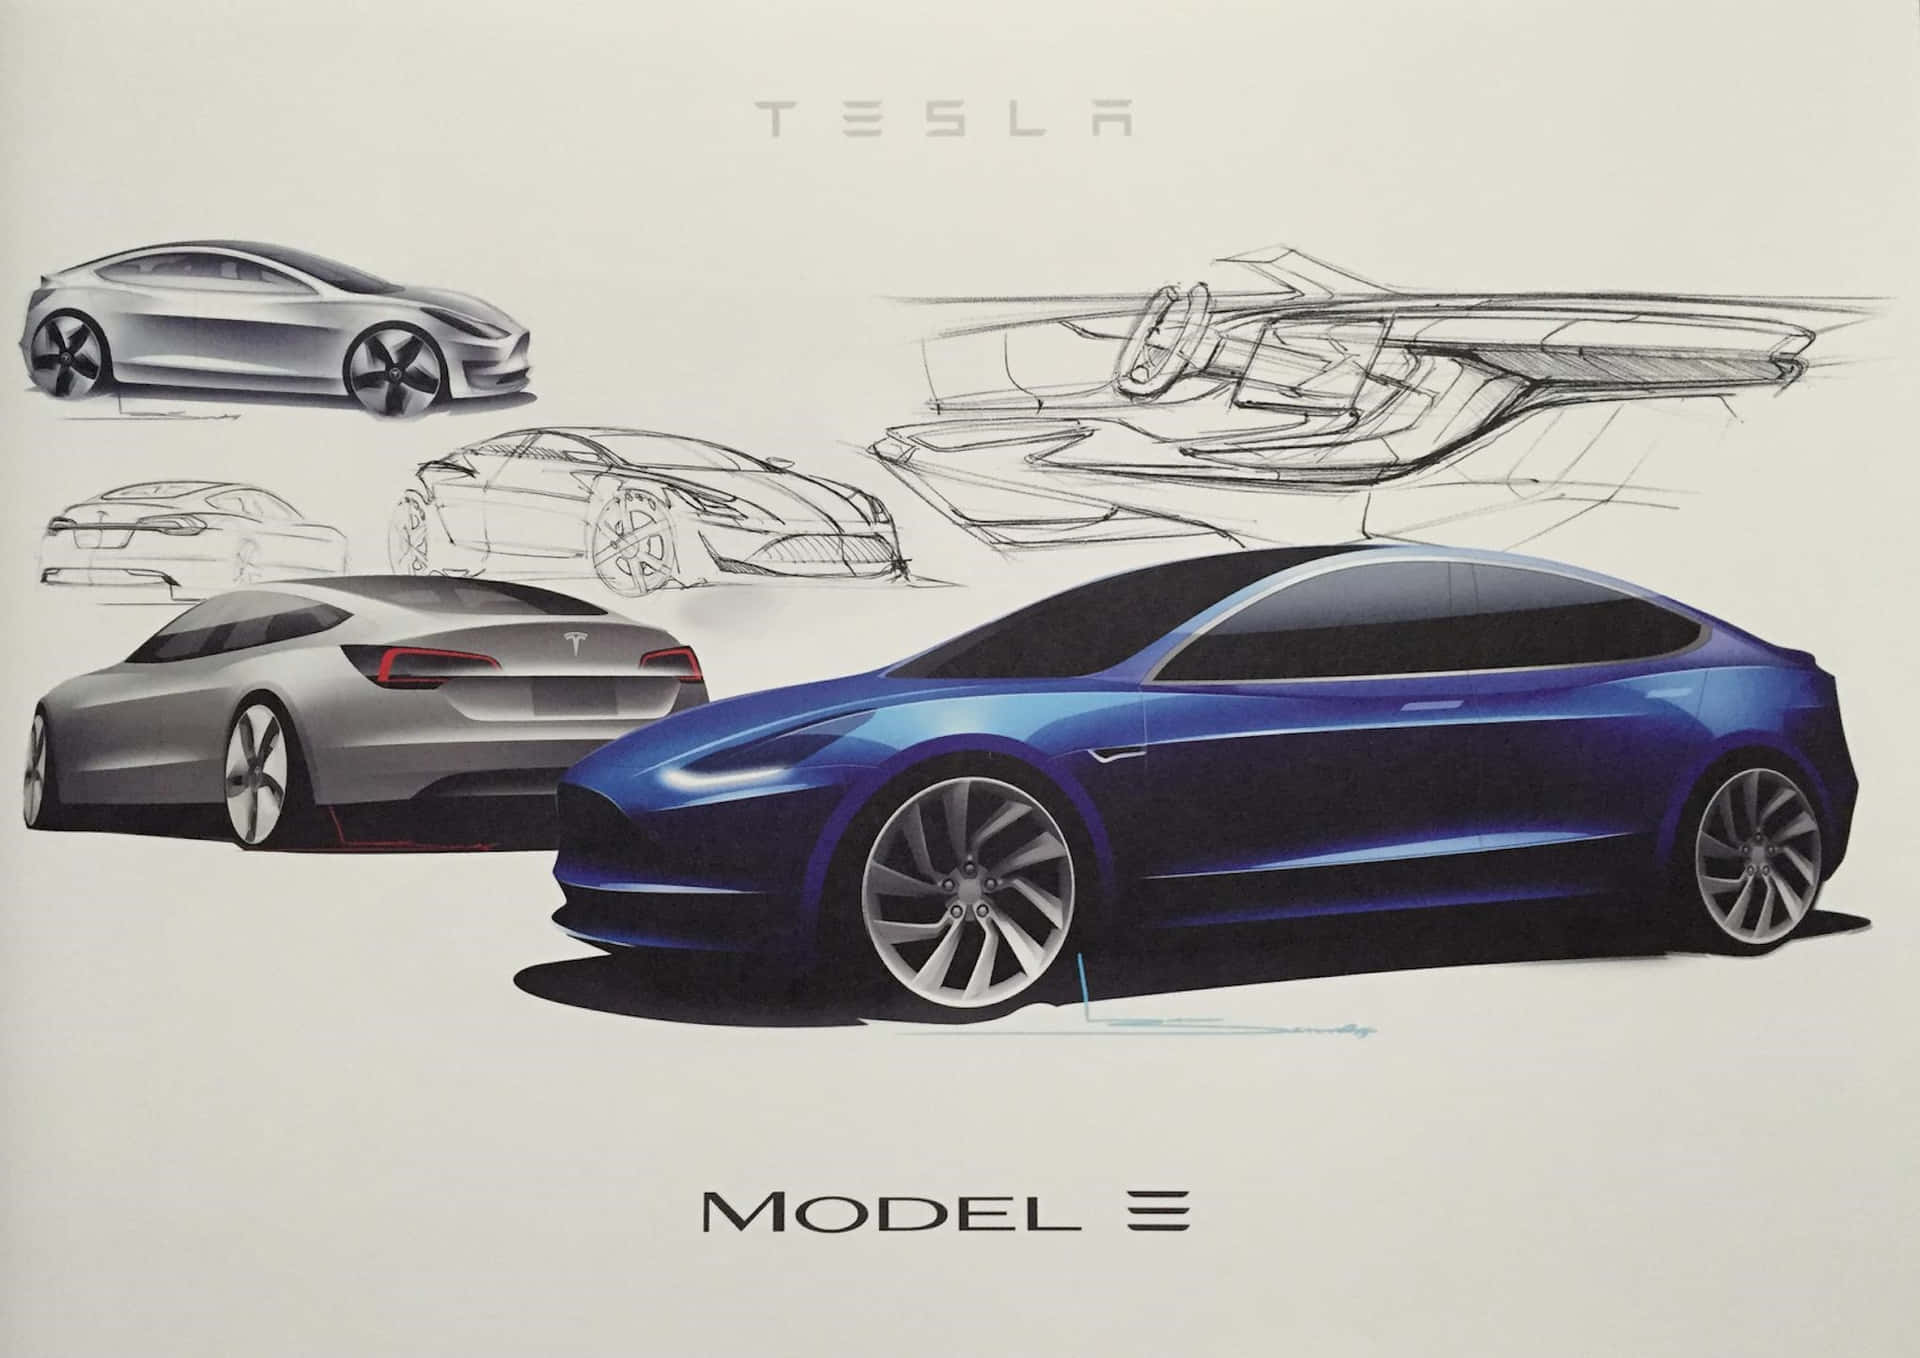 Teslamodel 3: Lusso Ecologico